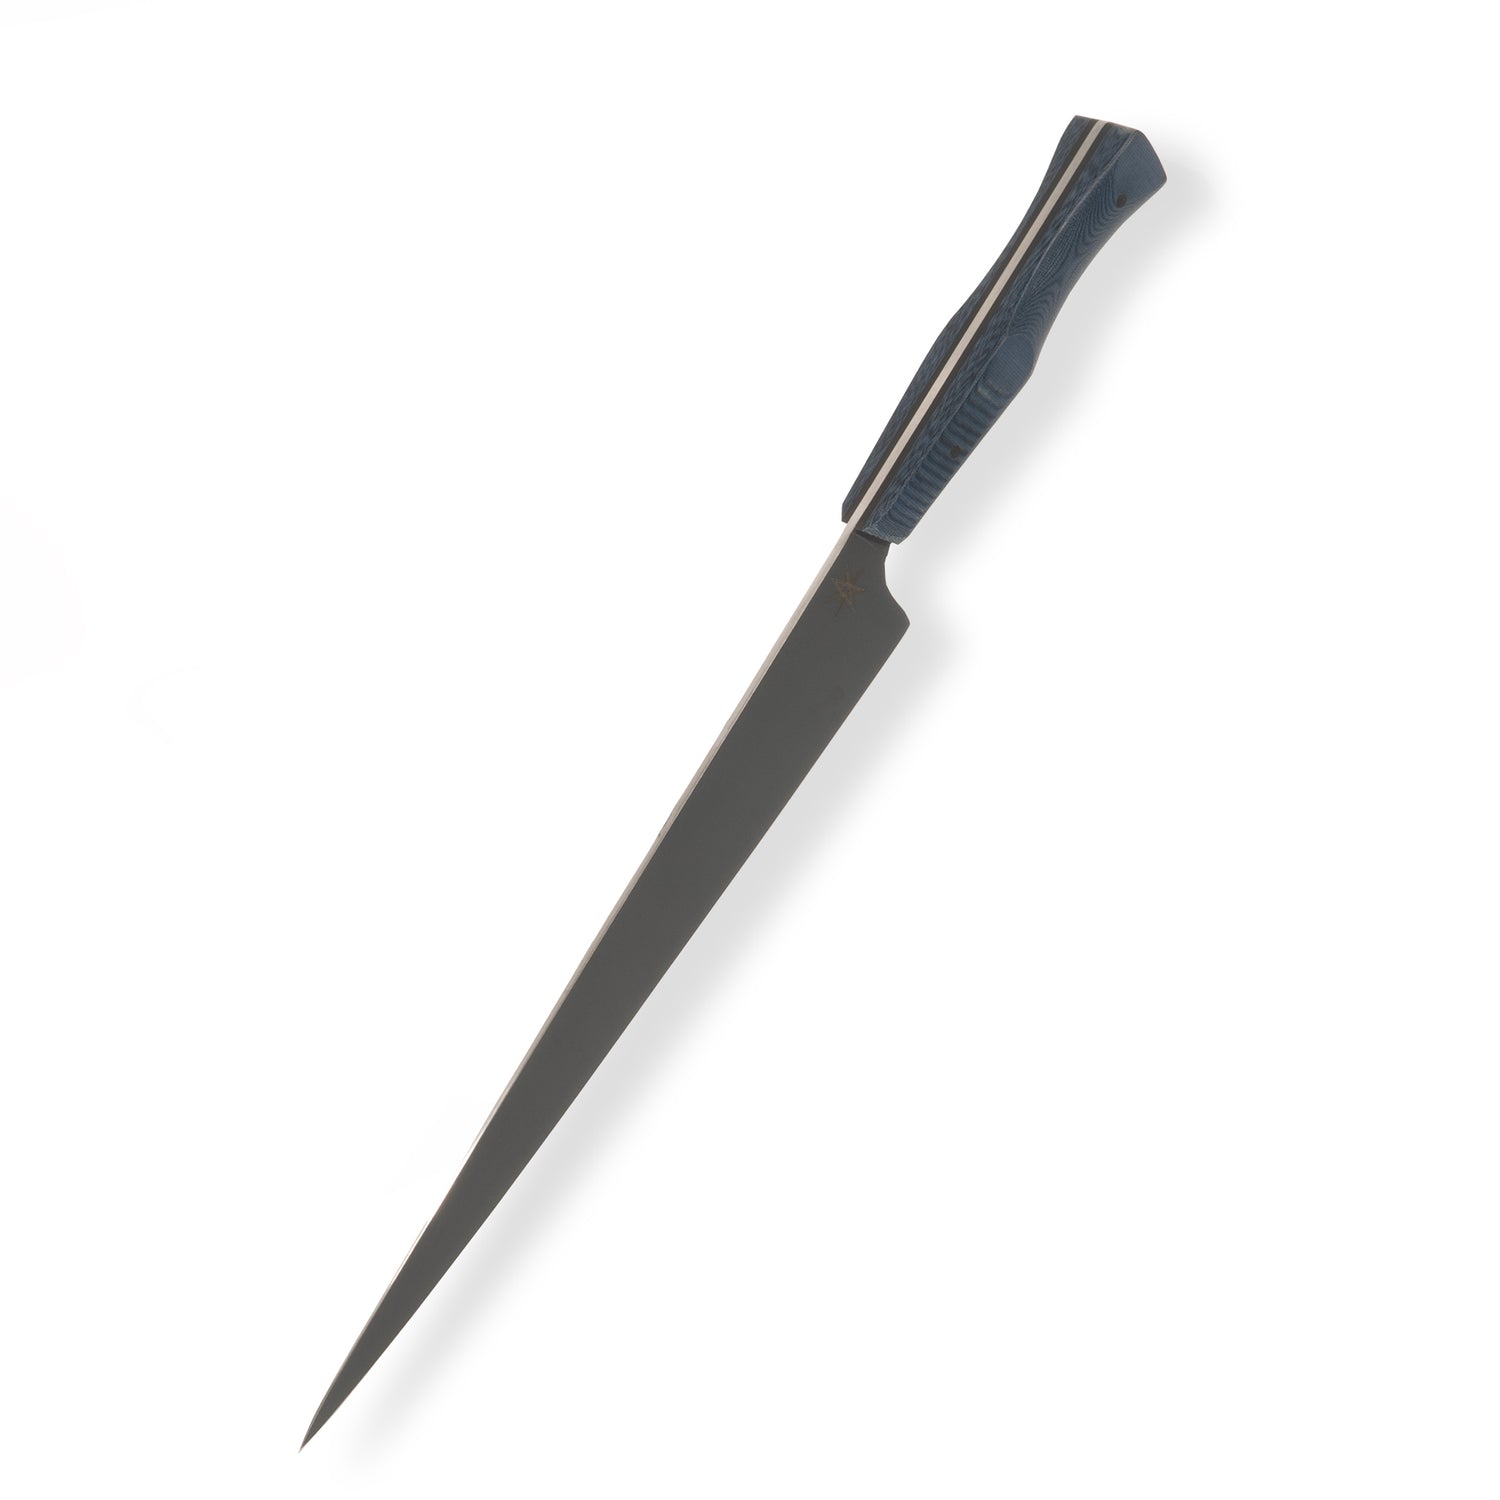 Town Cutler 10" Slicer knife with Cerakote finished blade and blue linen micarta handle. 